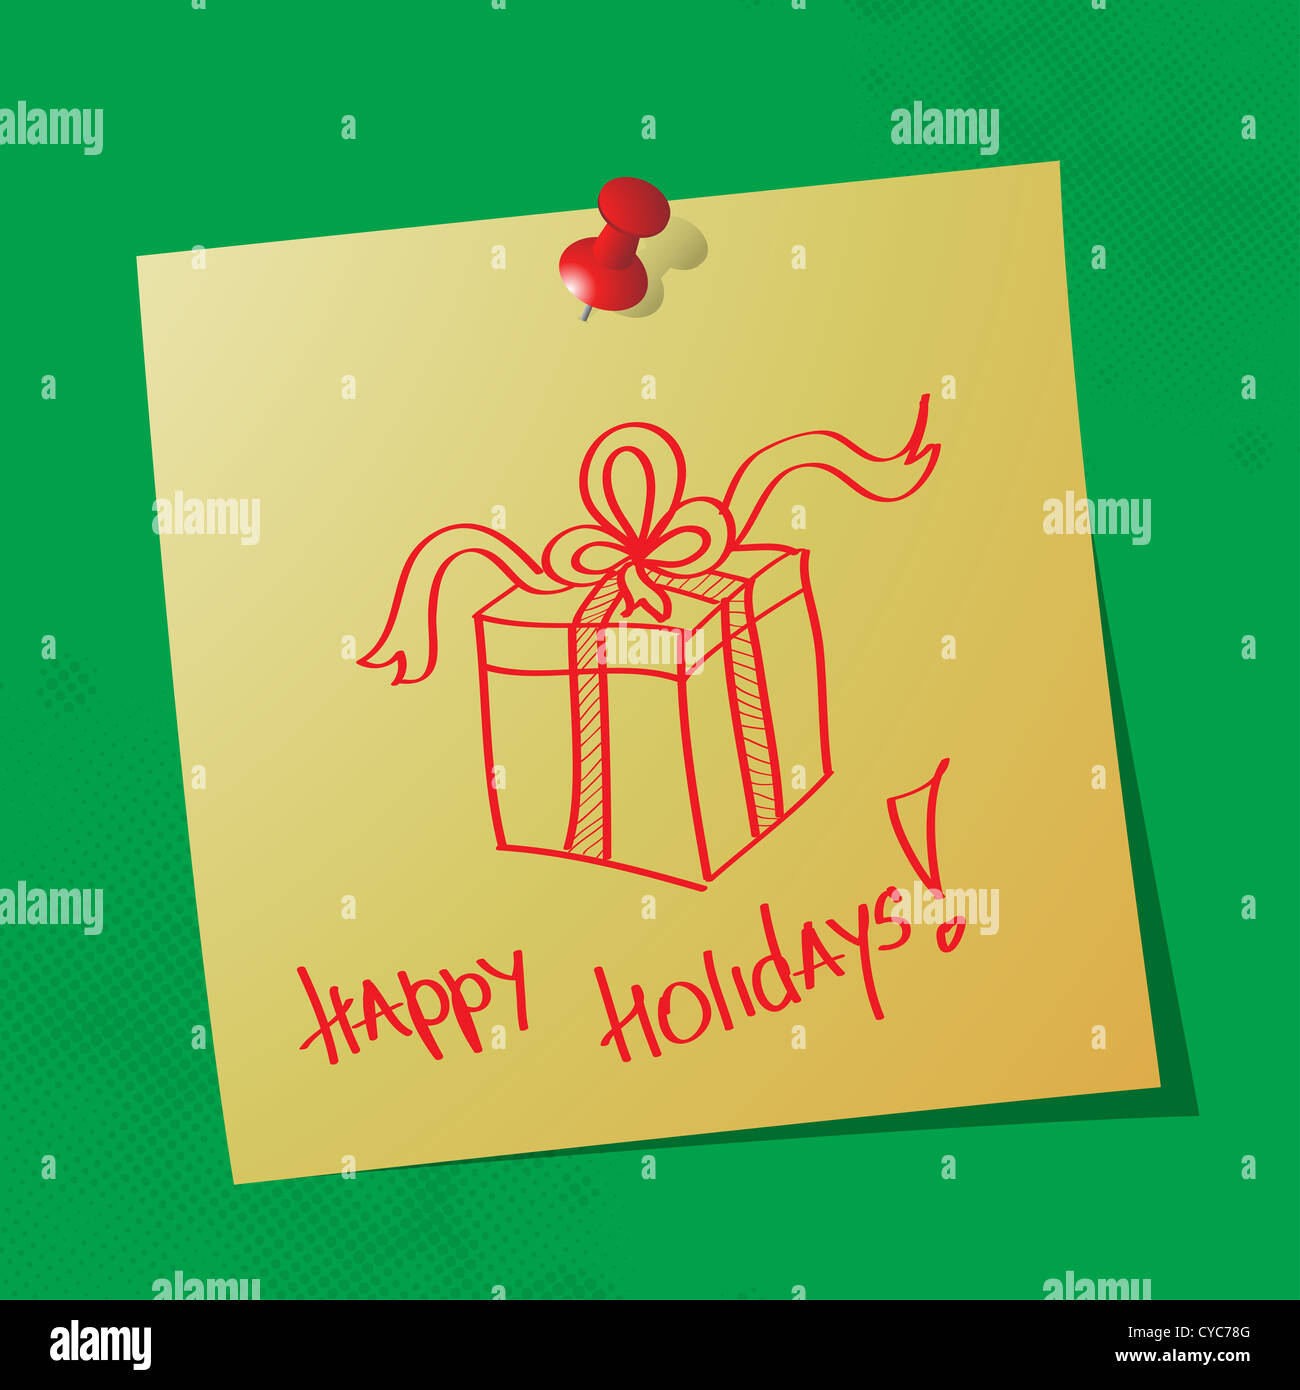 happy holidays handwritten message on sticky paper, illustration Stock Photo